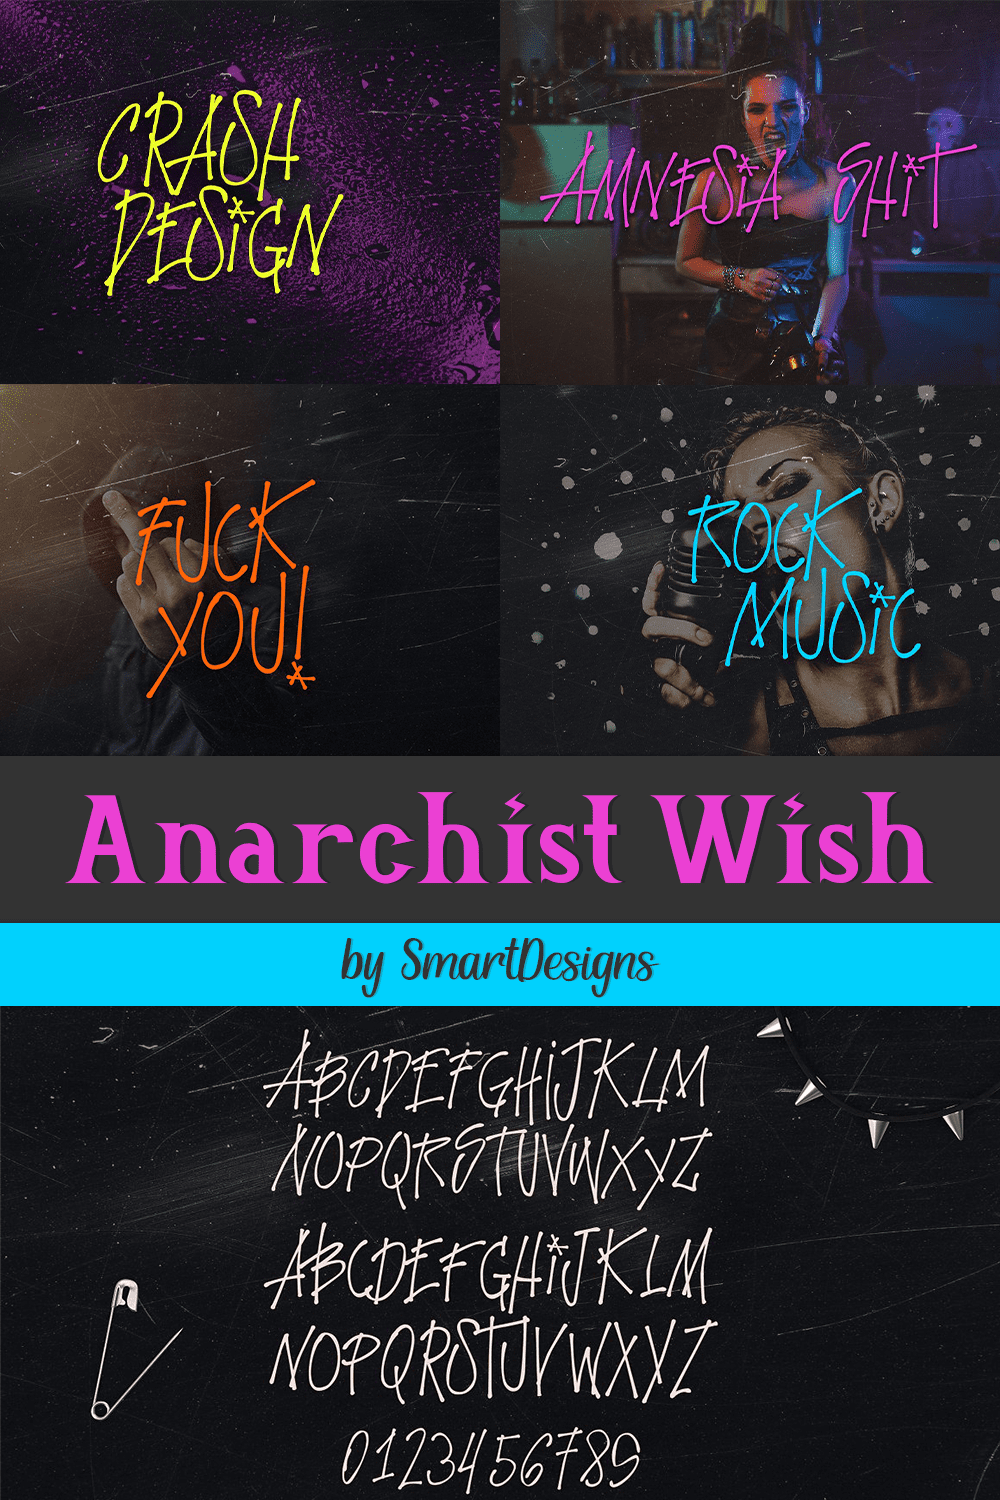 Anarchist wish of pinterest.